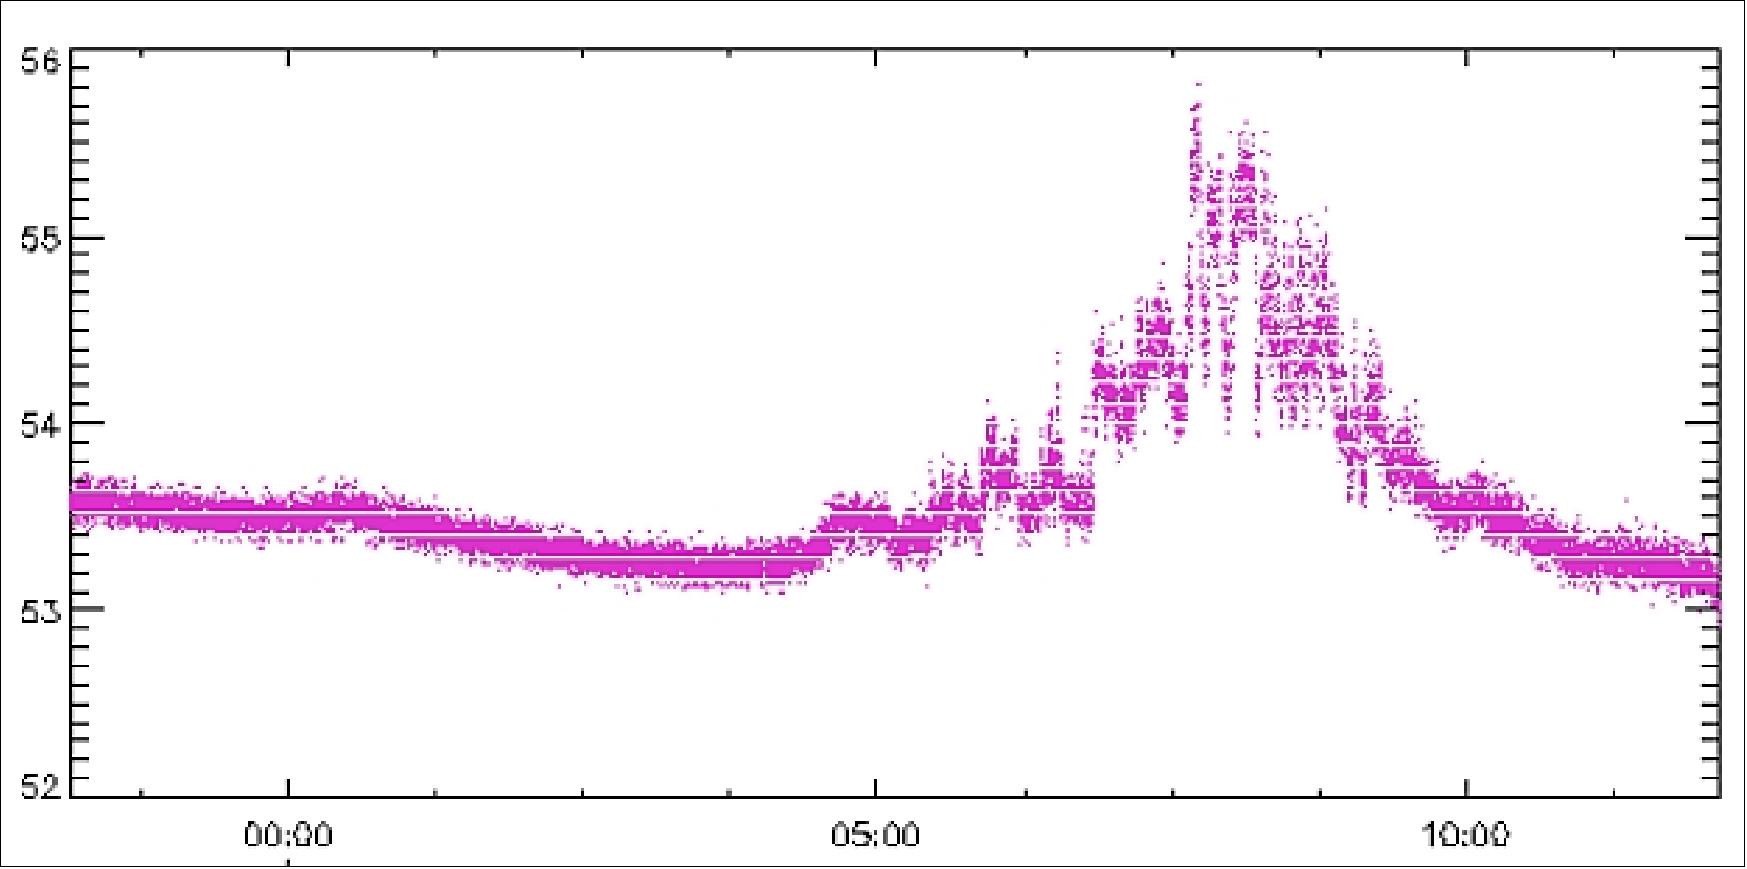 Figure 48: Illustration of the SAA noise level on May 29, 2011 (image credit: ROB, ESA)